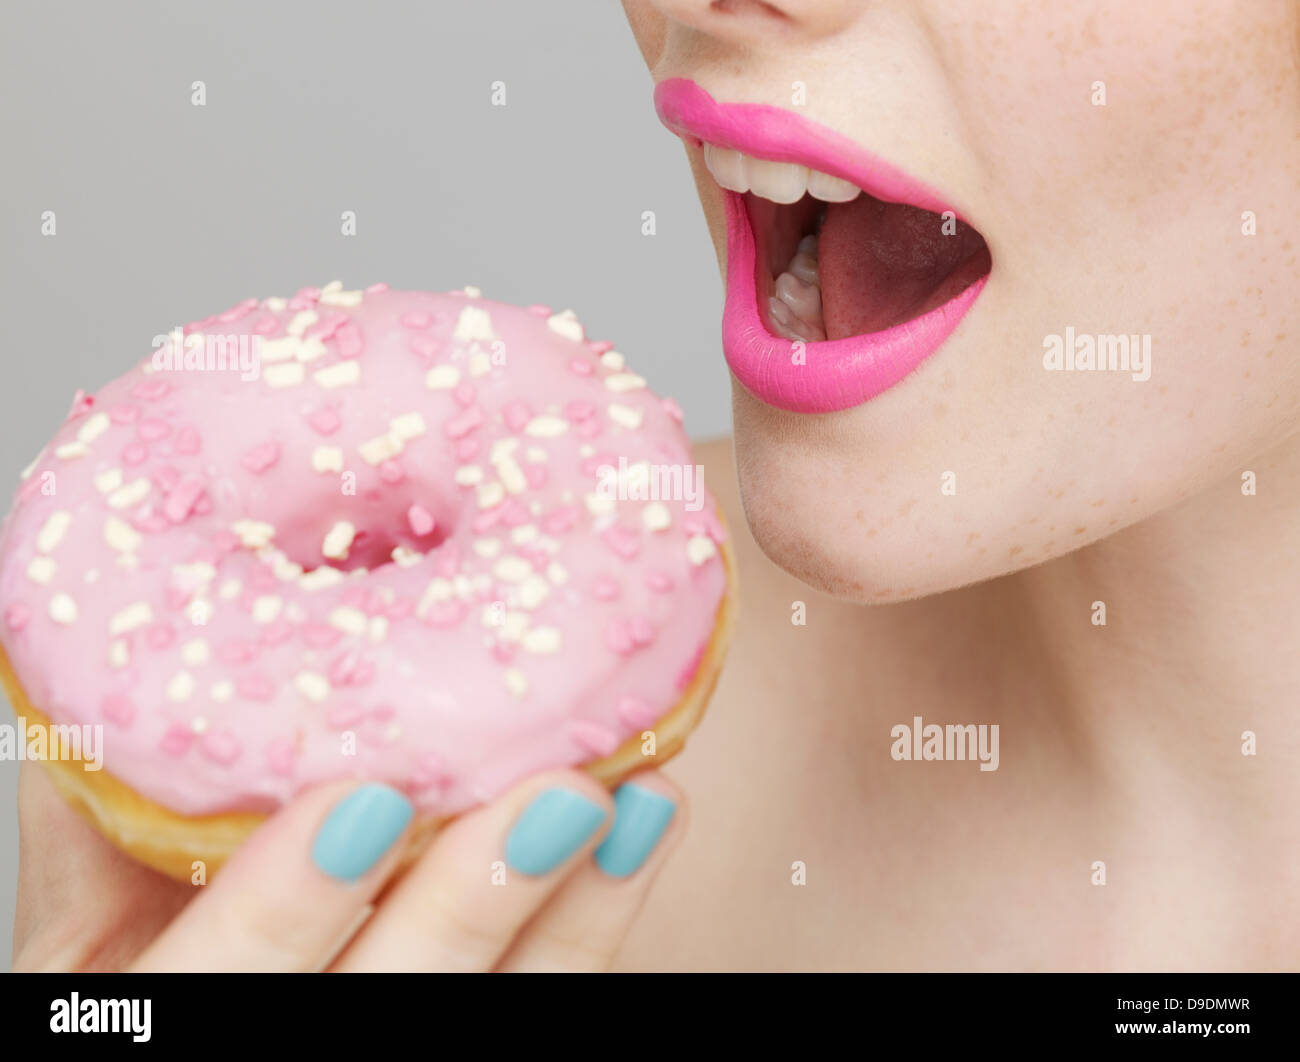 Woman wearing pink lipstick eating doughnut Stock Photo